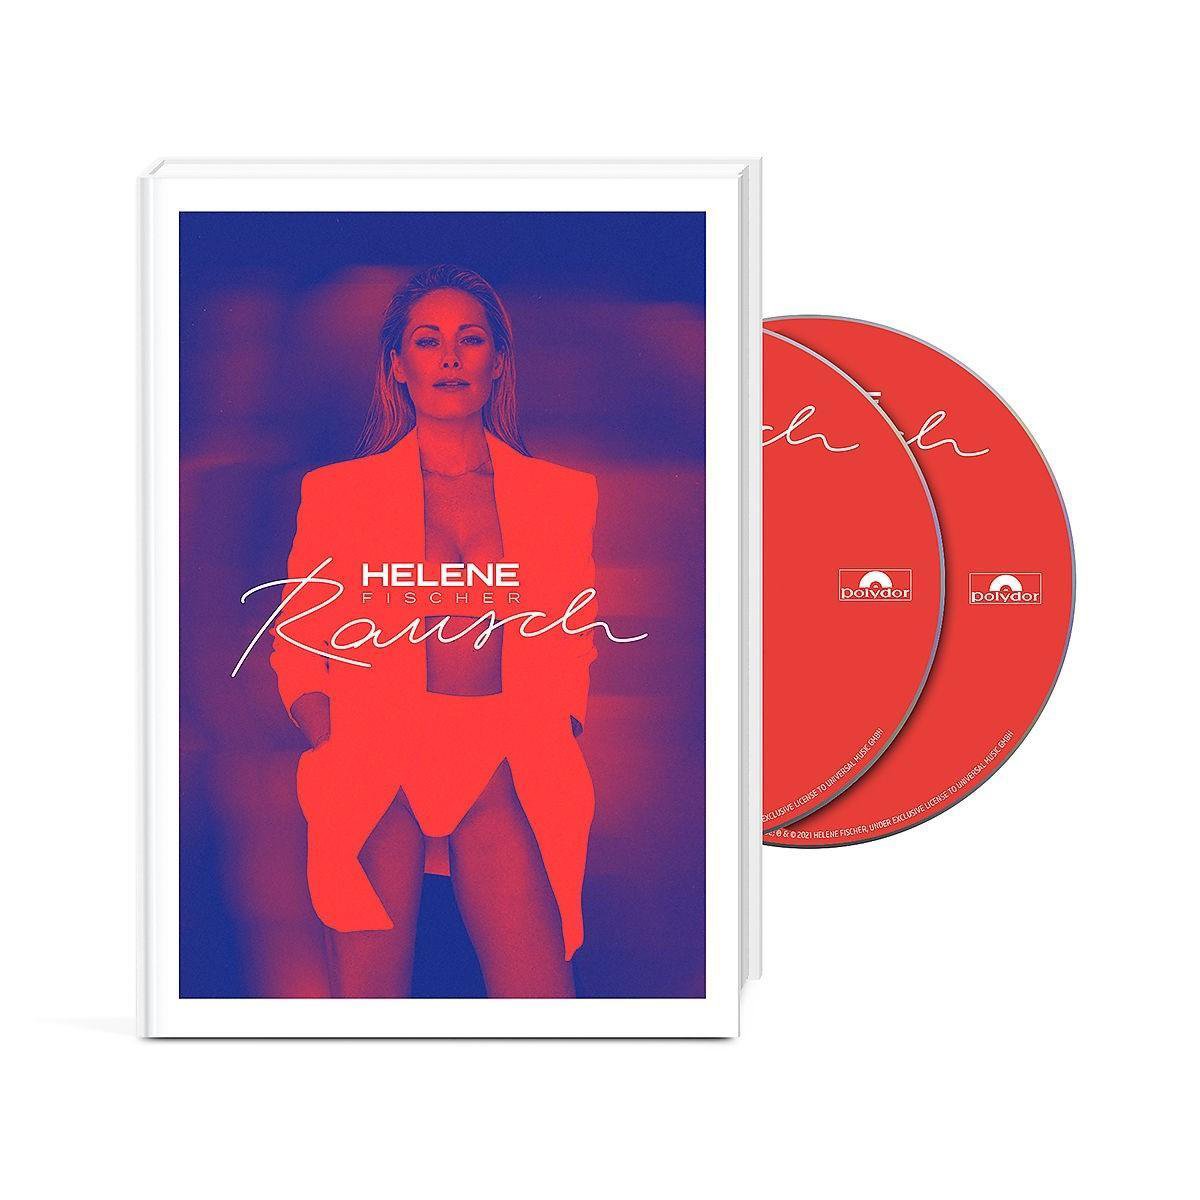 Helene Fischer - Rausch (2 CD) (Limited Edition) - Helene Fischer